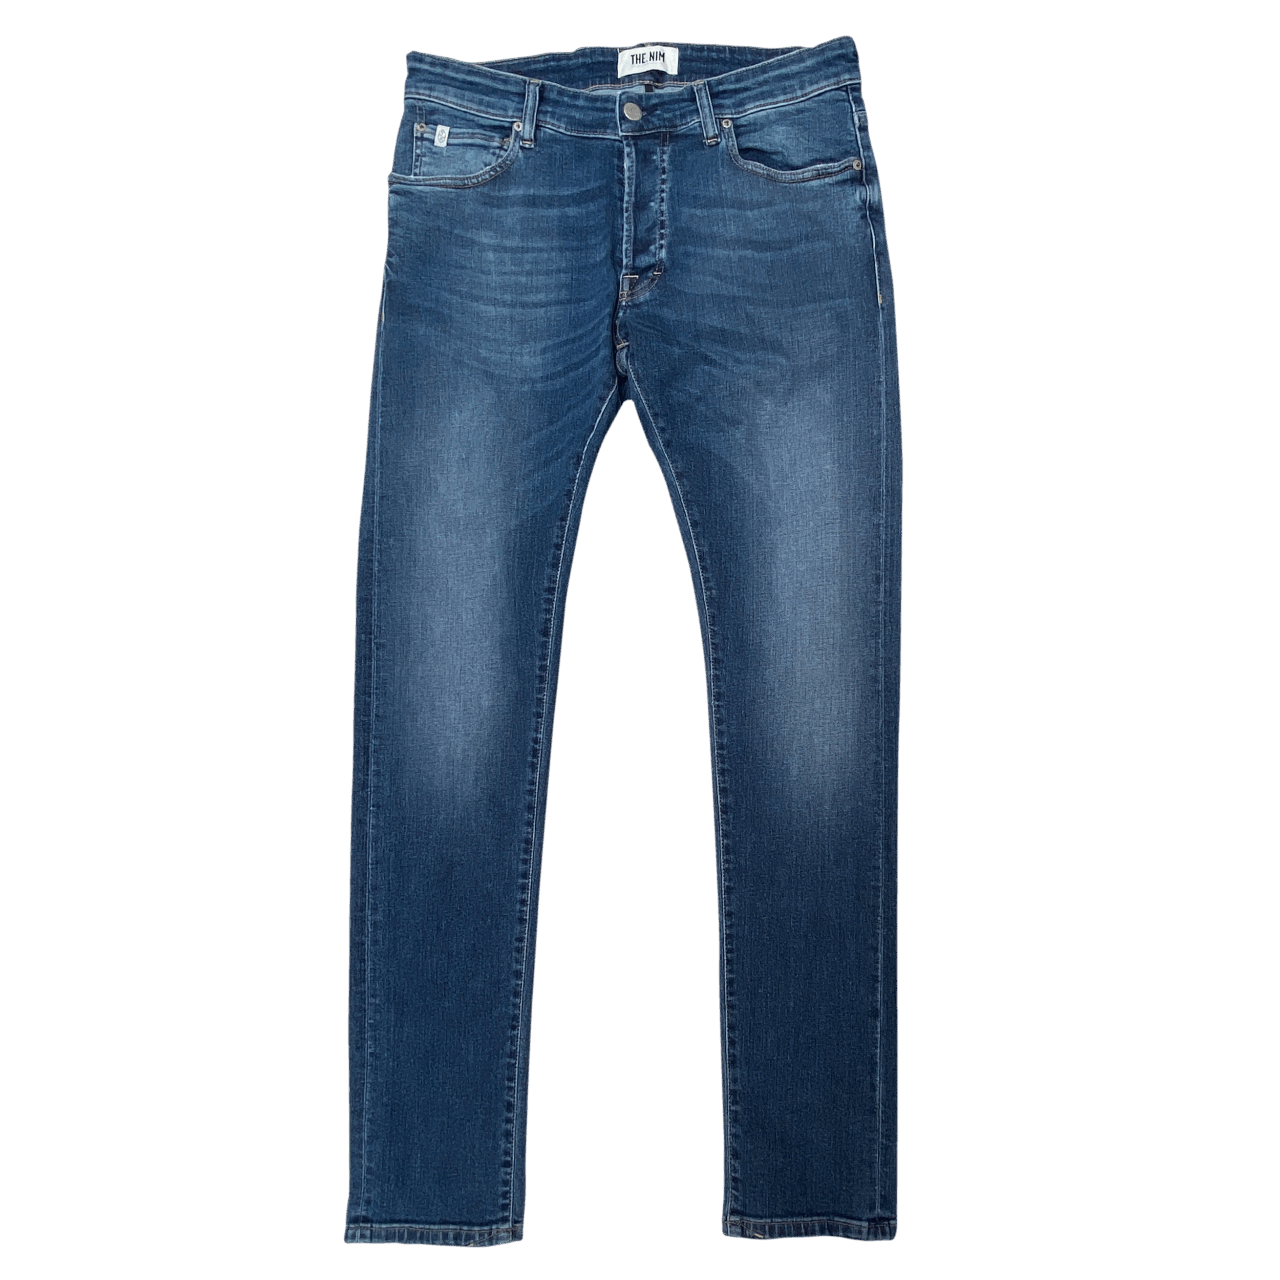 THE.NIM 901 Dylan Jeans Slim Fit - medium